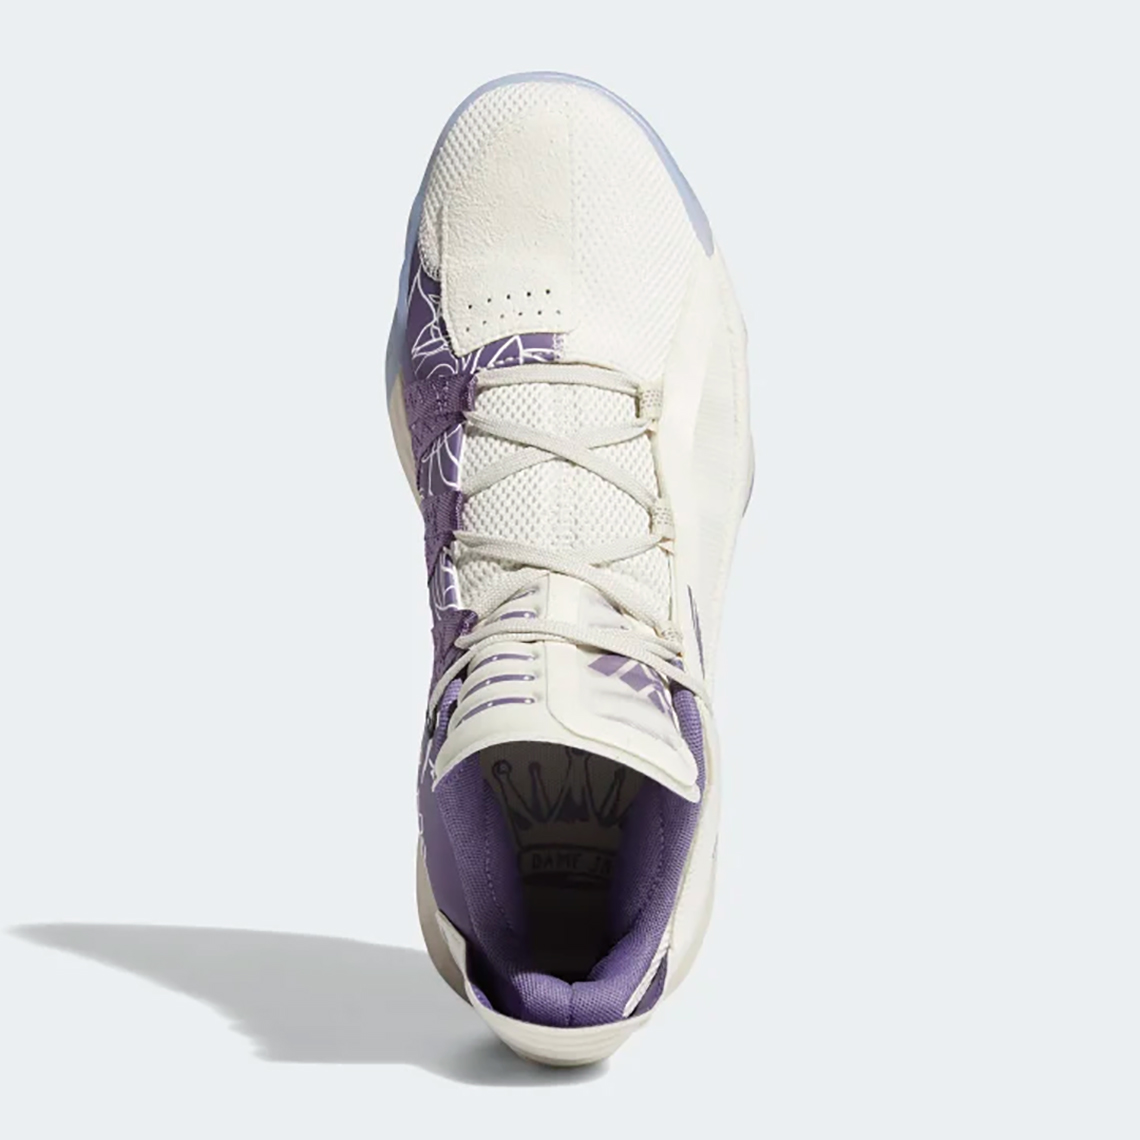 Adidas Dame 6 White Purple Fu9448 4